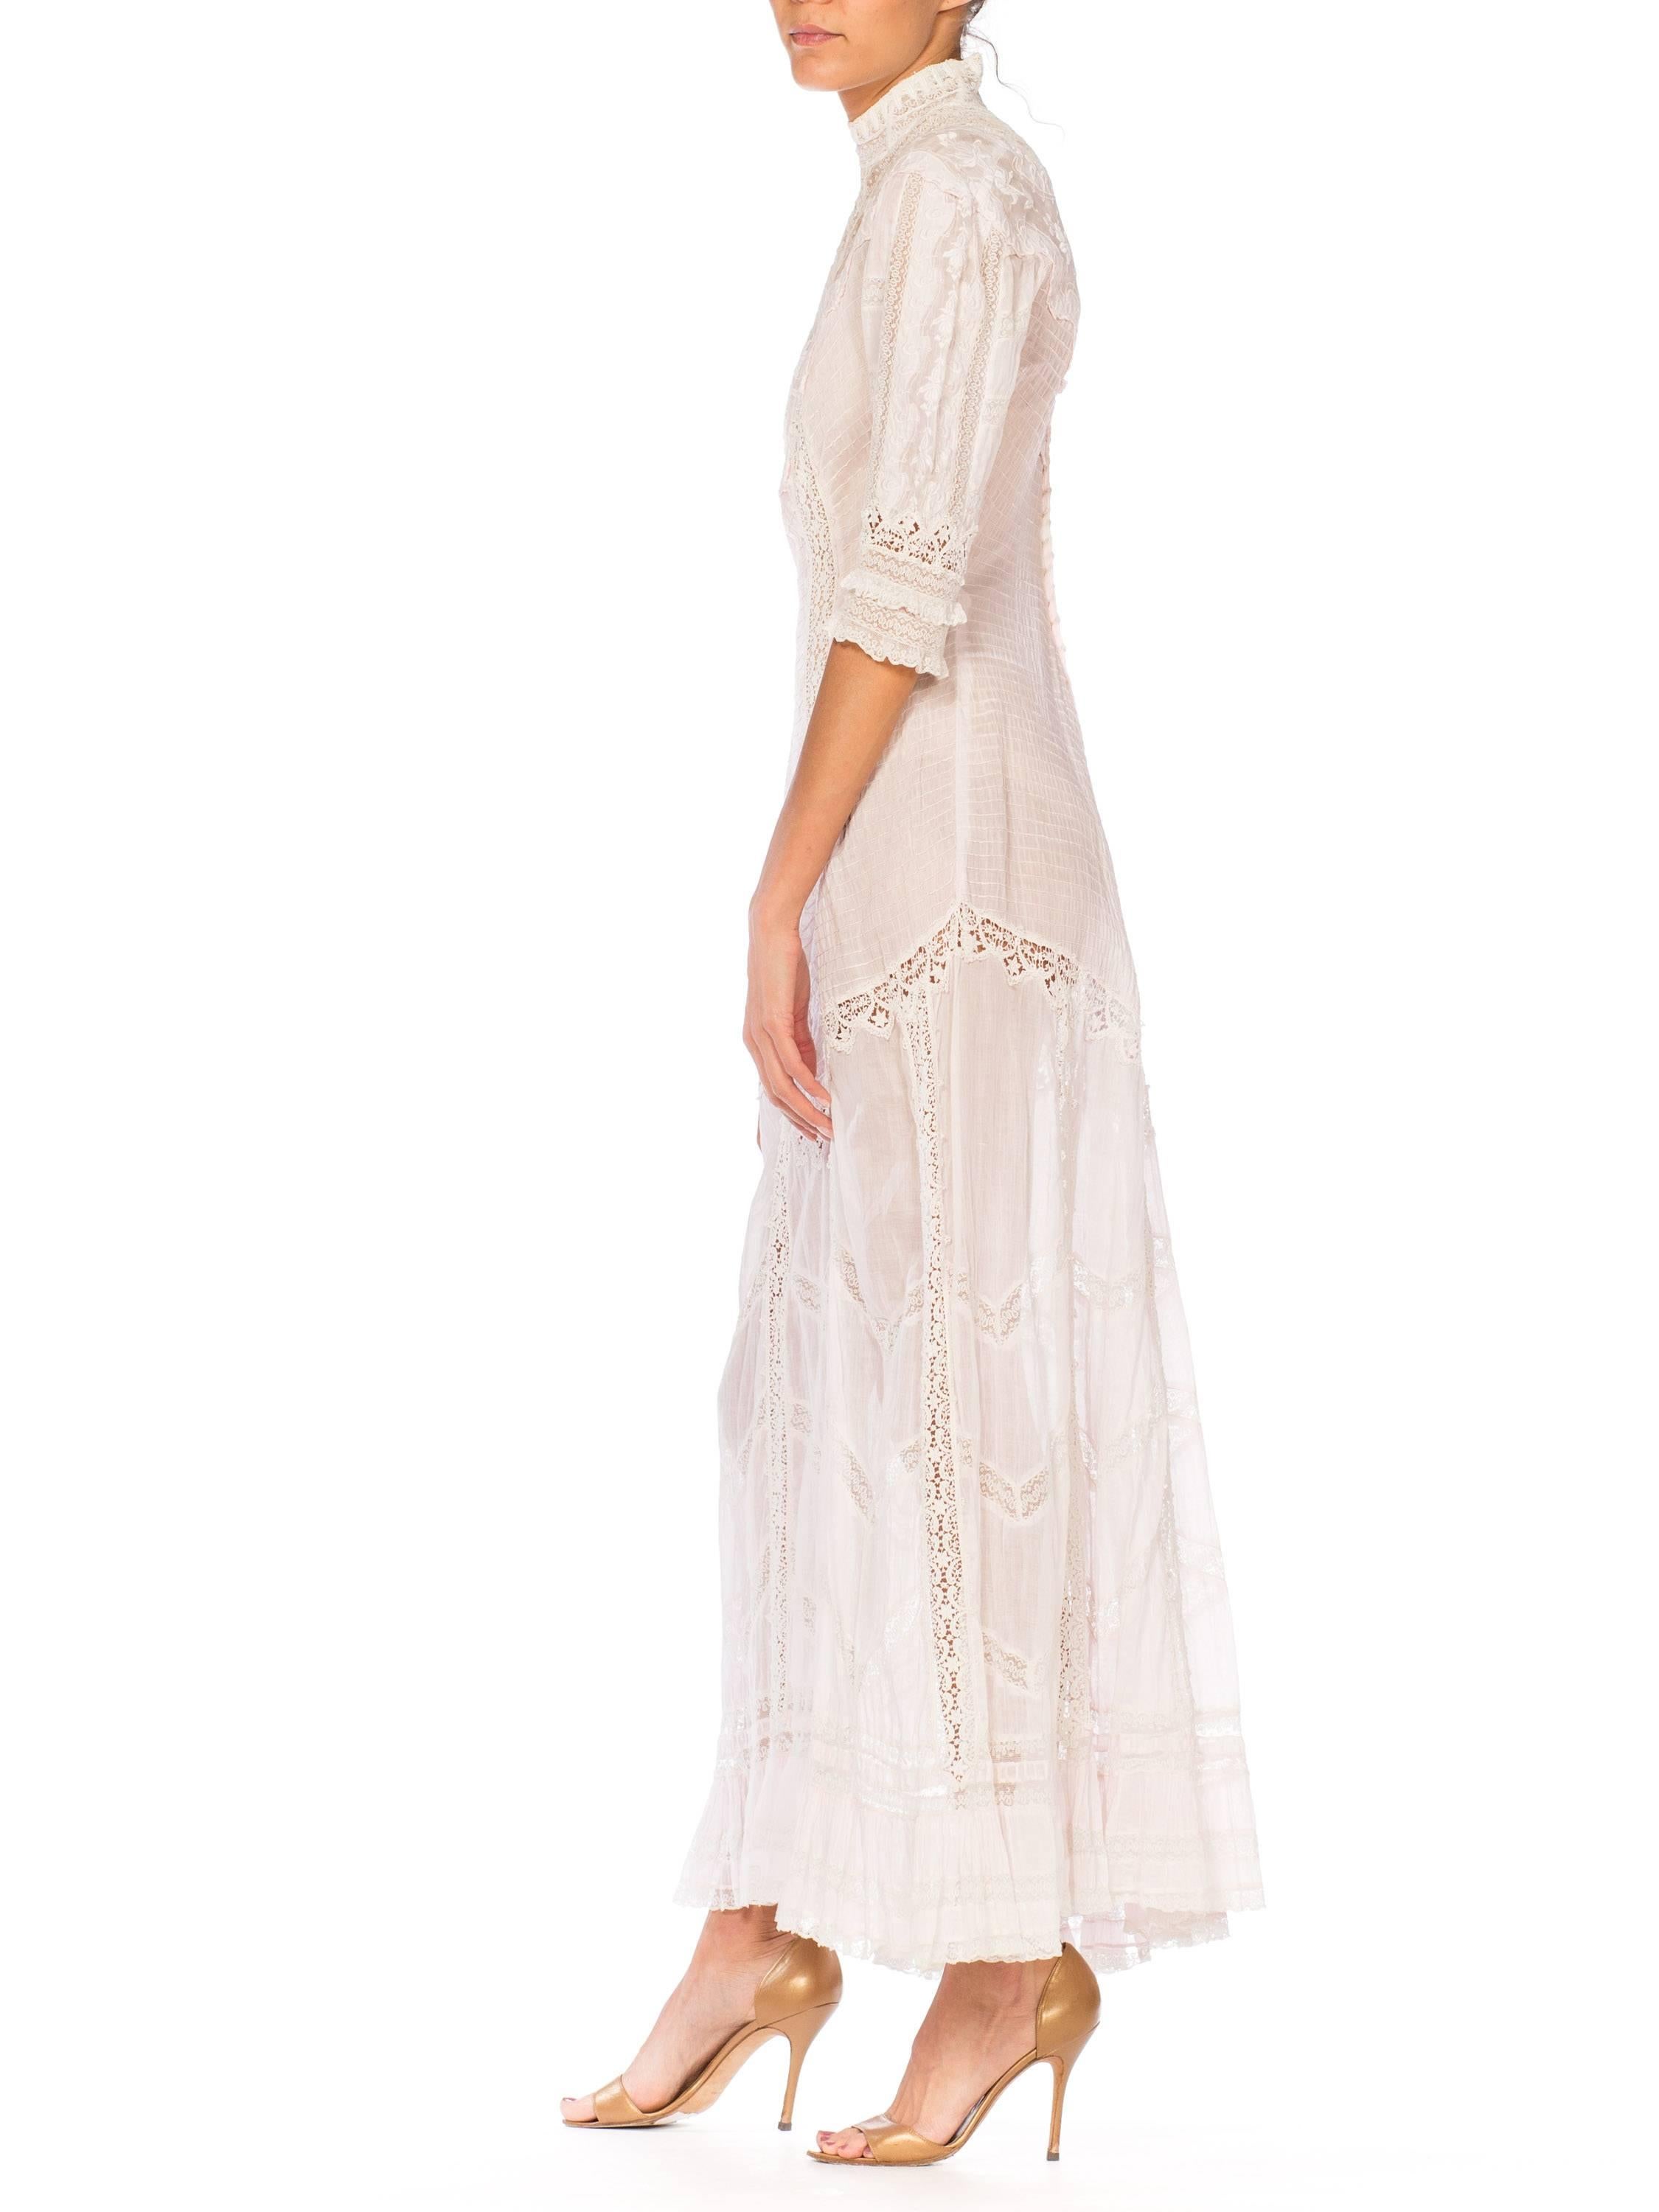 Belle Epoque Swan Neck Princess Line Victorian Organic Cotton and Lace Tea Dress 12